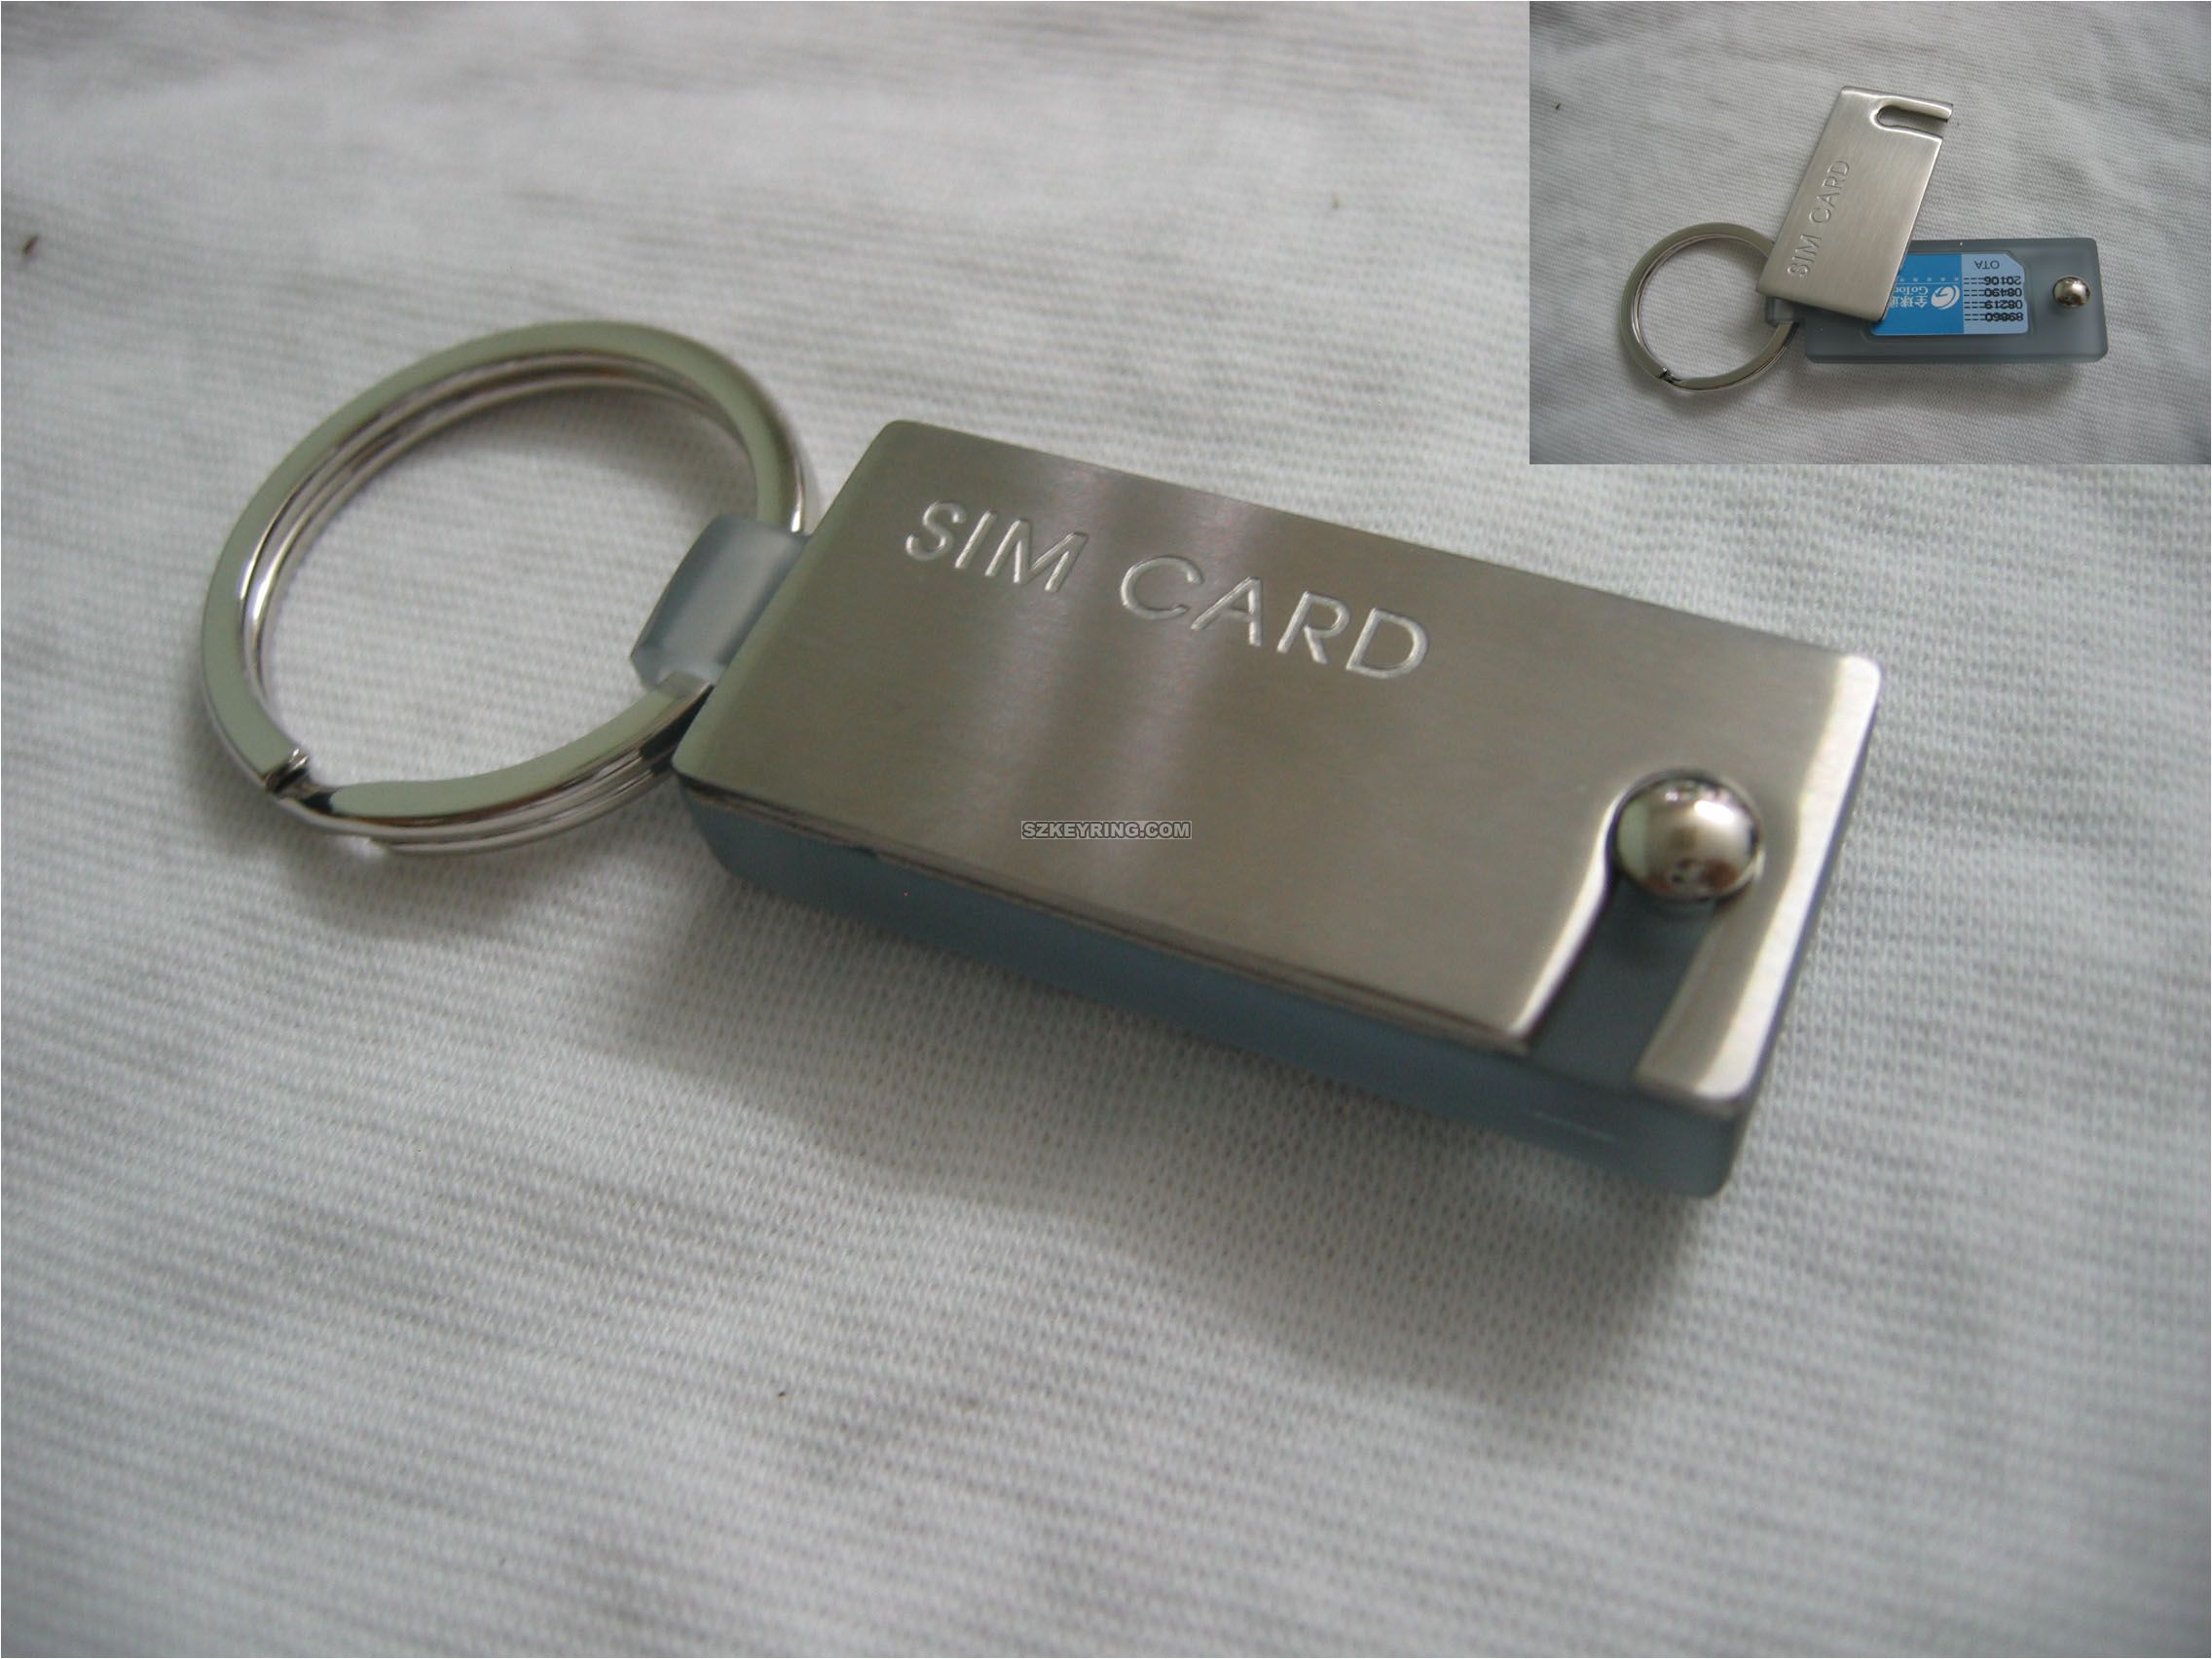 Simcard holder Keychain, Simcard holder keyring-SPK0001